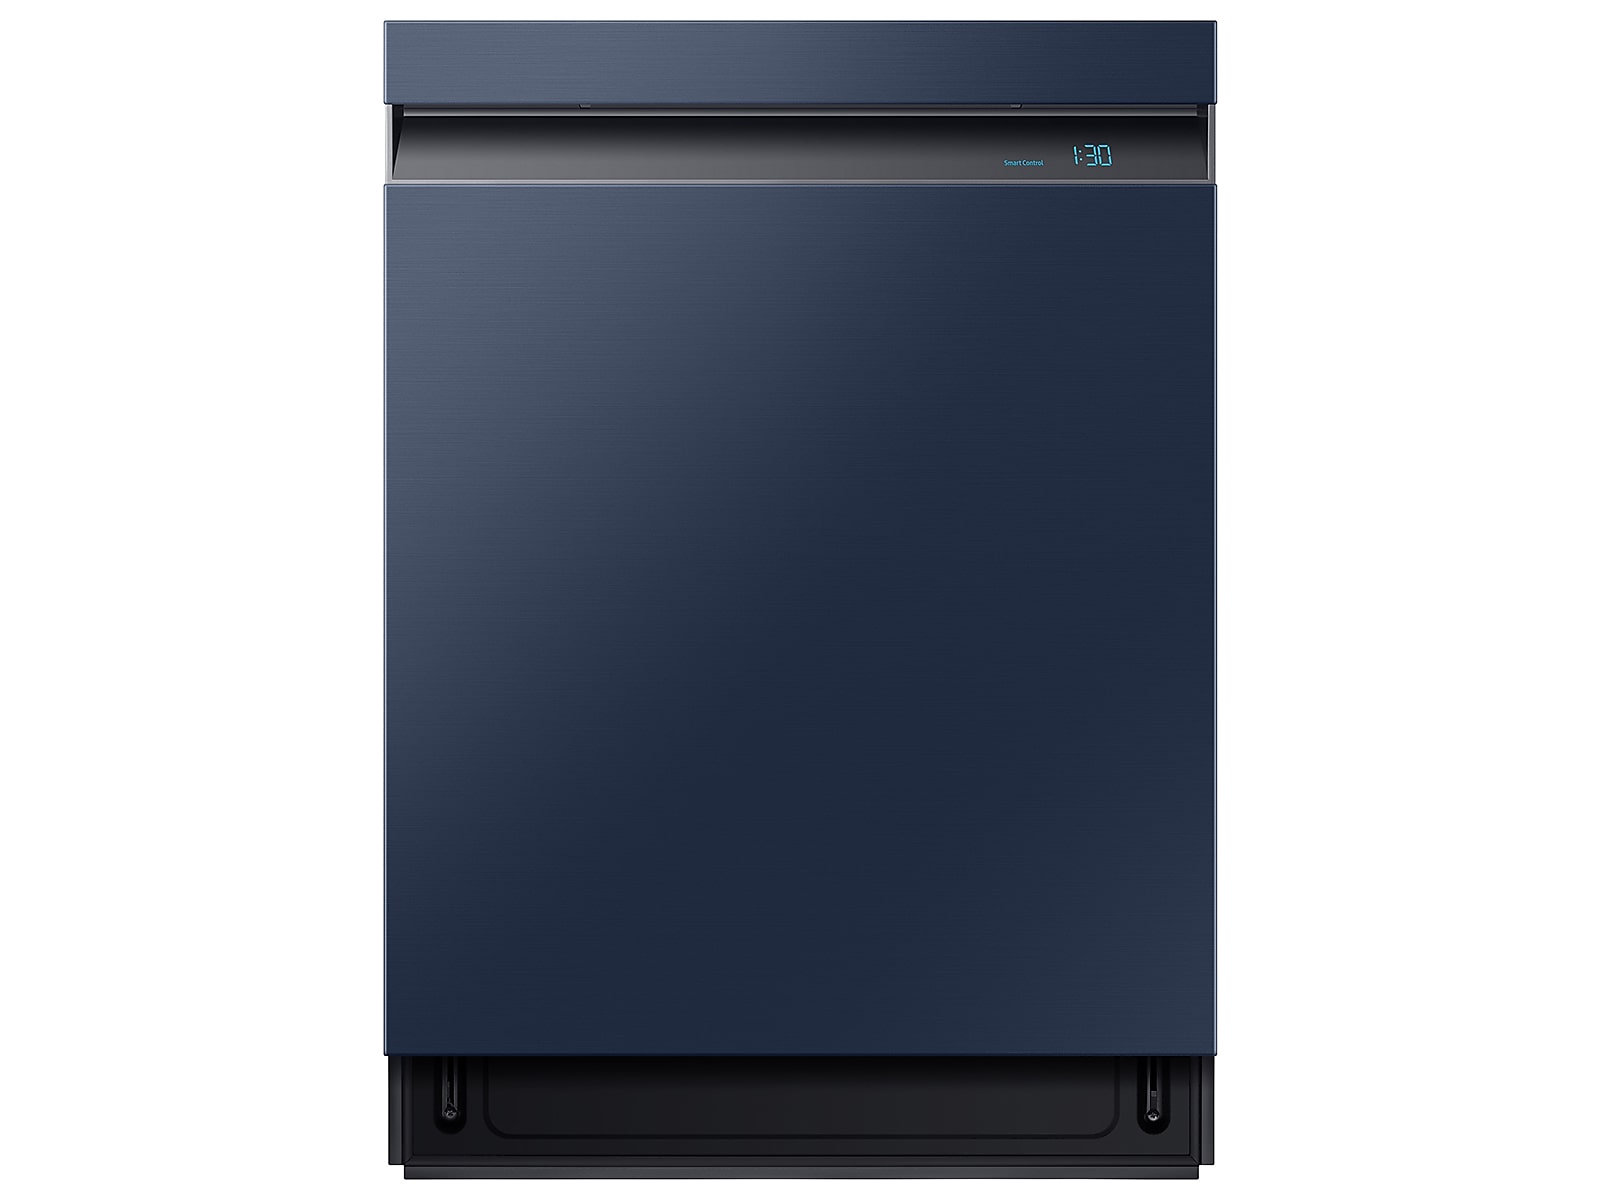 Samsung Bespoke Smart 39dBA Dishwasher with Linear Wash in Fingerprint Resistant Navy Blue Stainless Steel/ Bespoke(DW80R9950QN/AA) photo